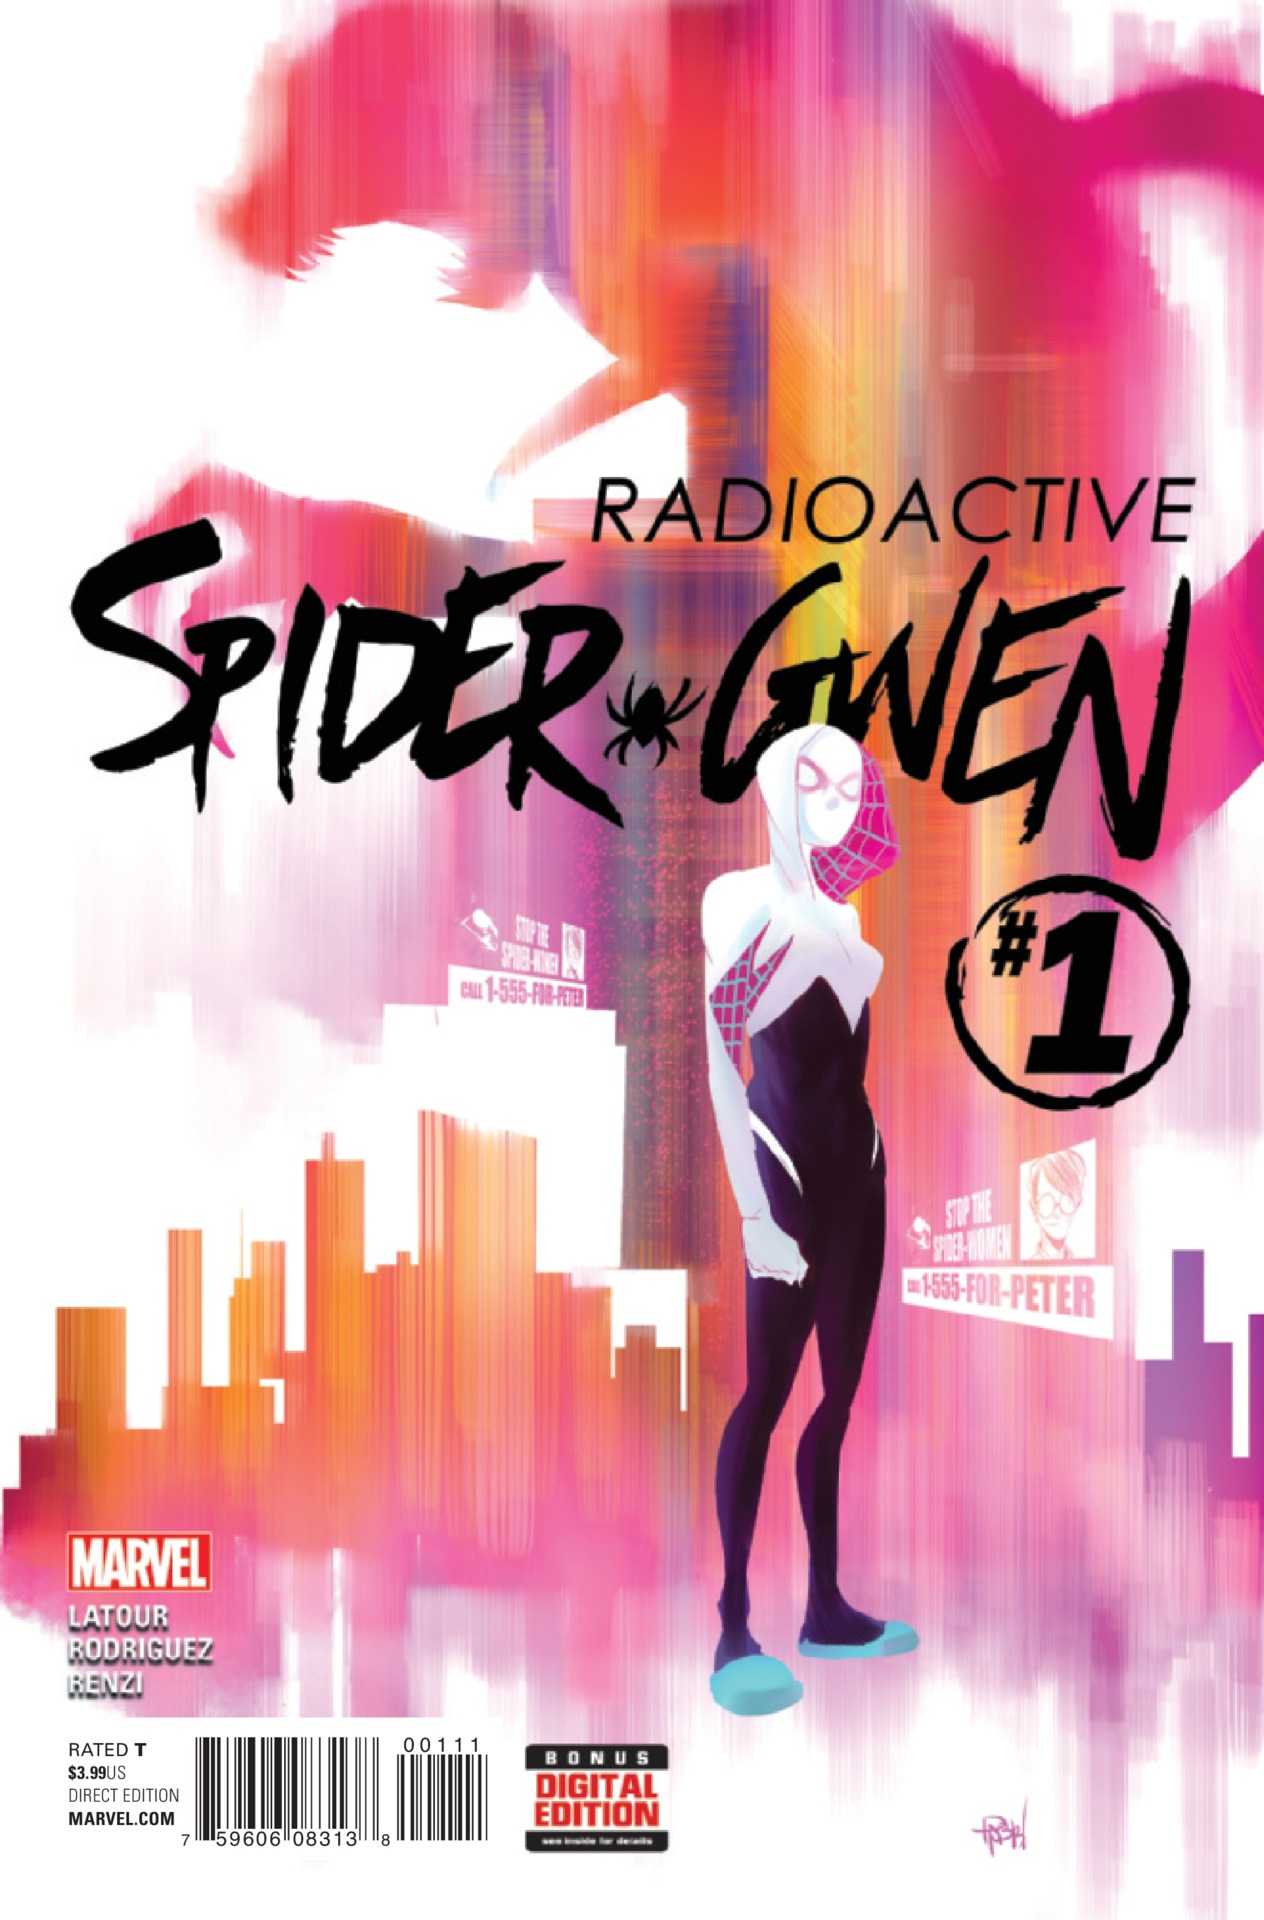 Marvel CHRISTOPHER SPIDER-GWEN #1 Action Figure Variant Latour RODRIGUEZ